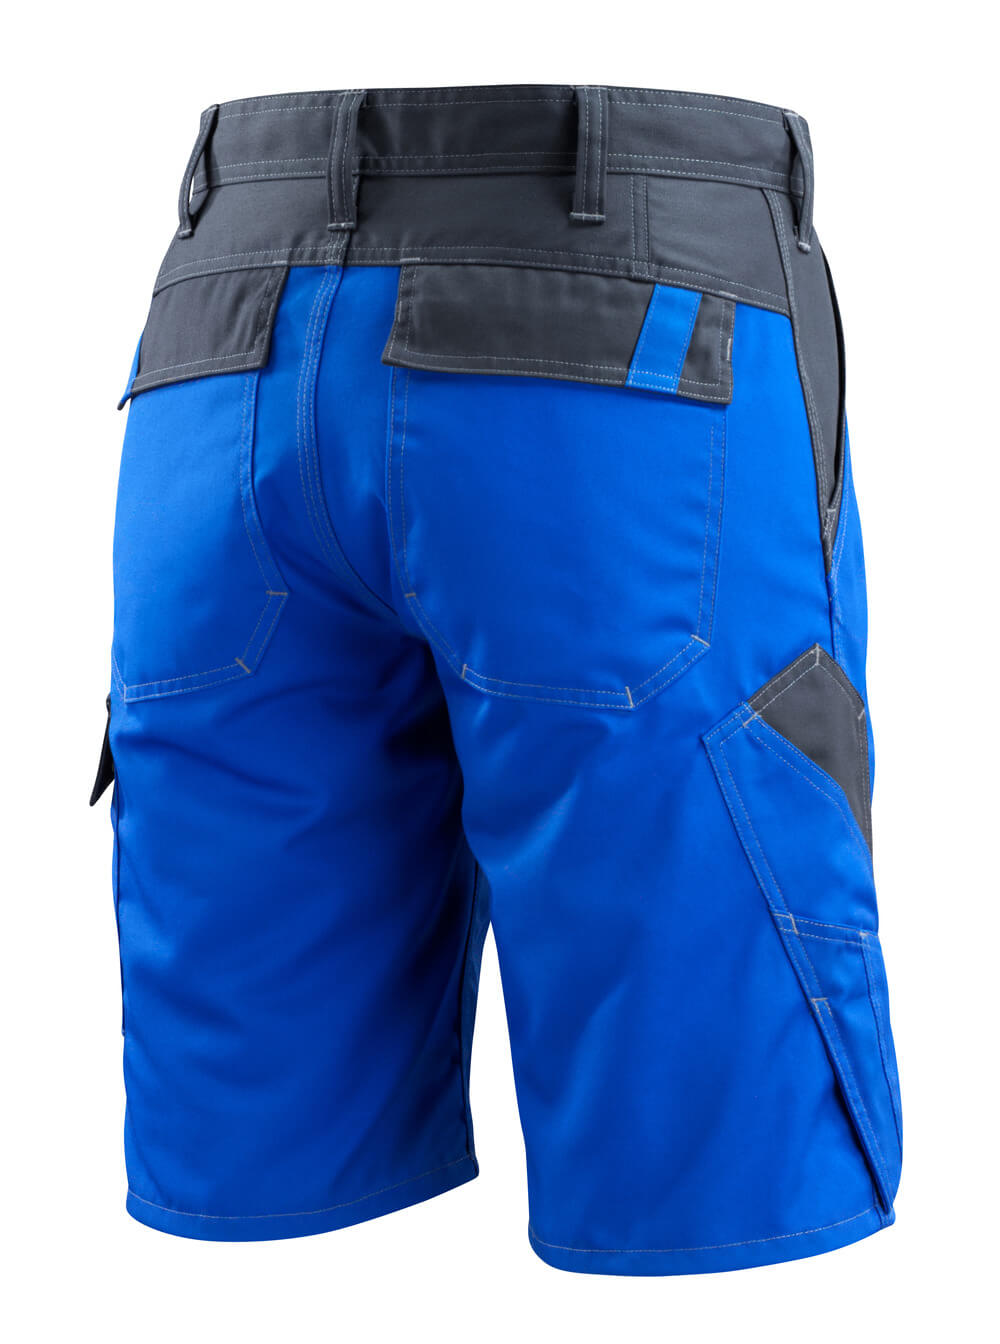 MASCOT® LIGHT Shorts »Sunbury« Gr. C42, kornblau/schwarzblau - erhältlich bei ♡ HUG Technik ✓